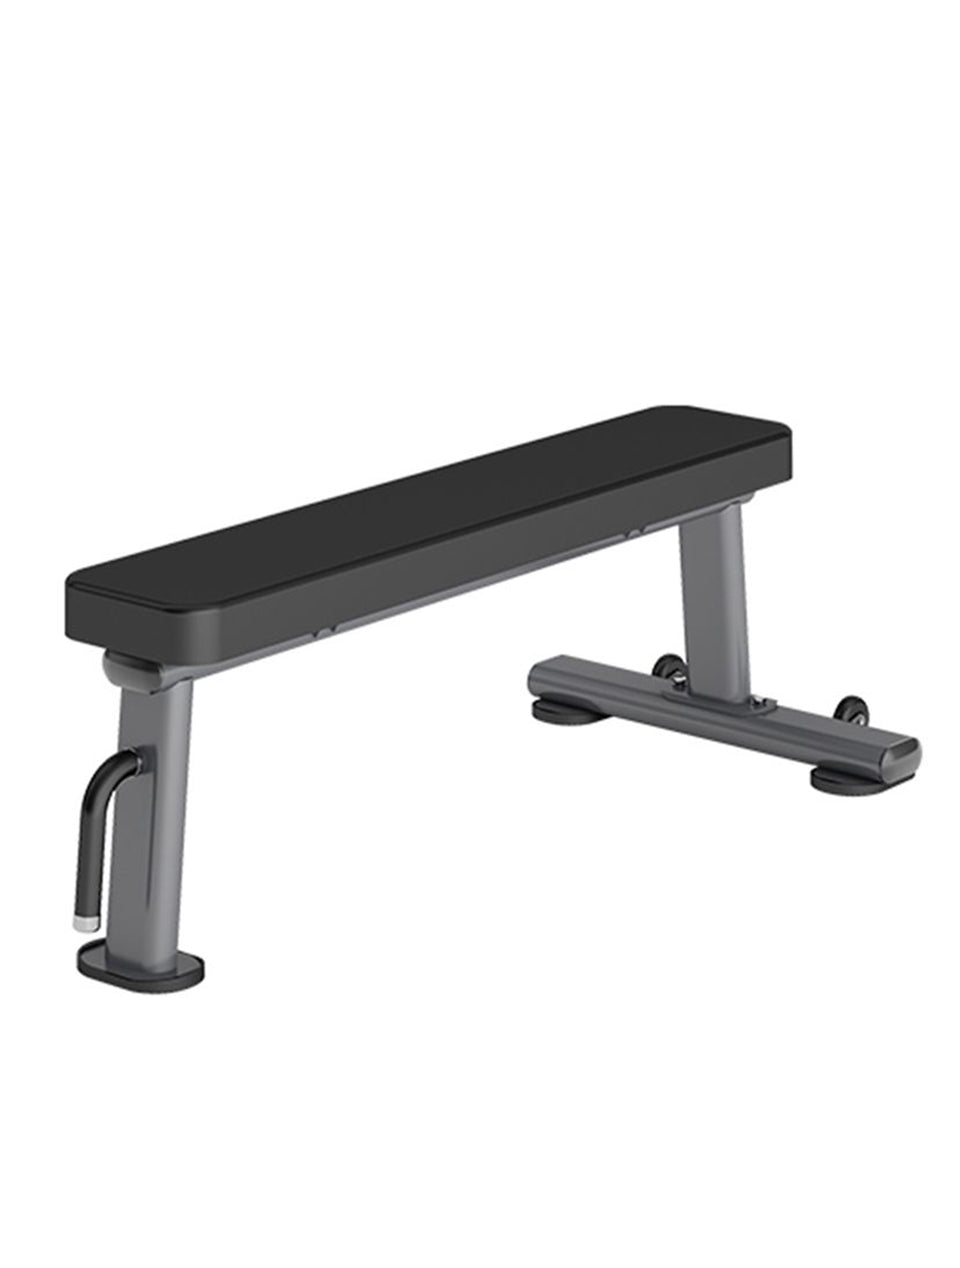 Insight Fitness Flat Bench DR014B